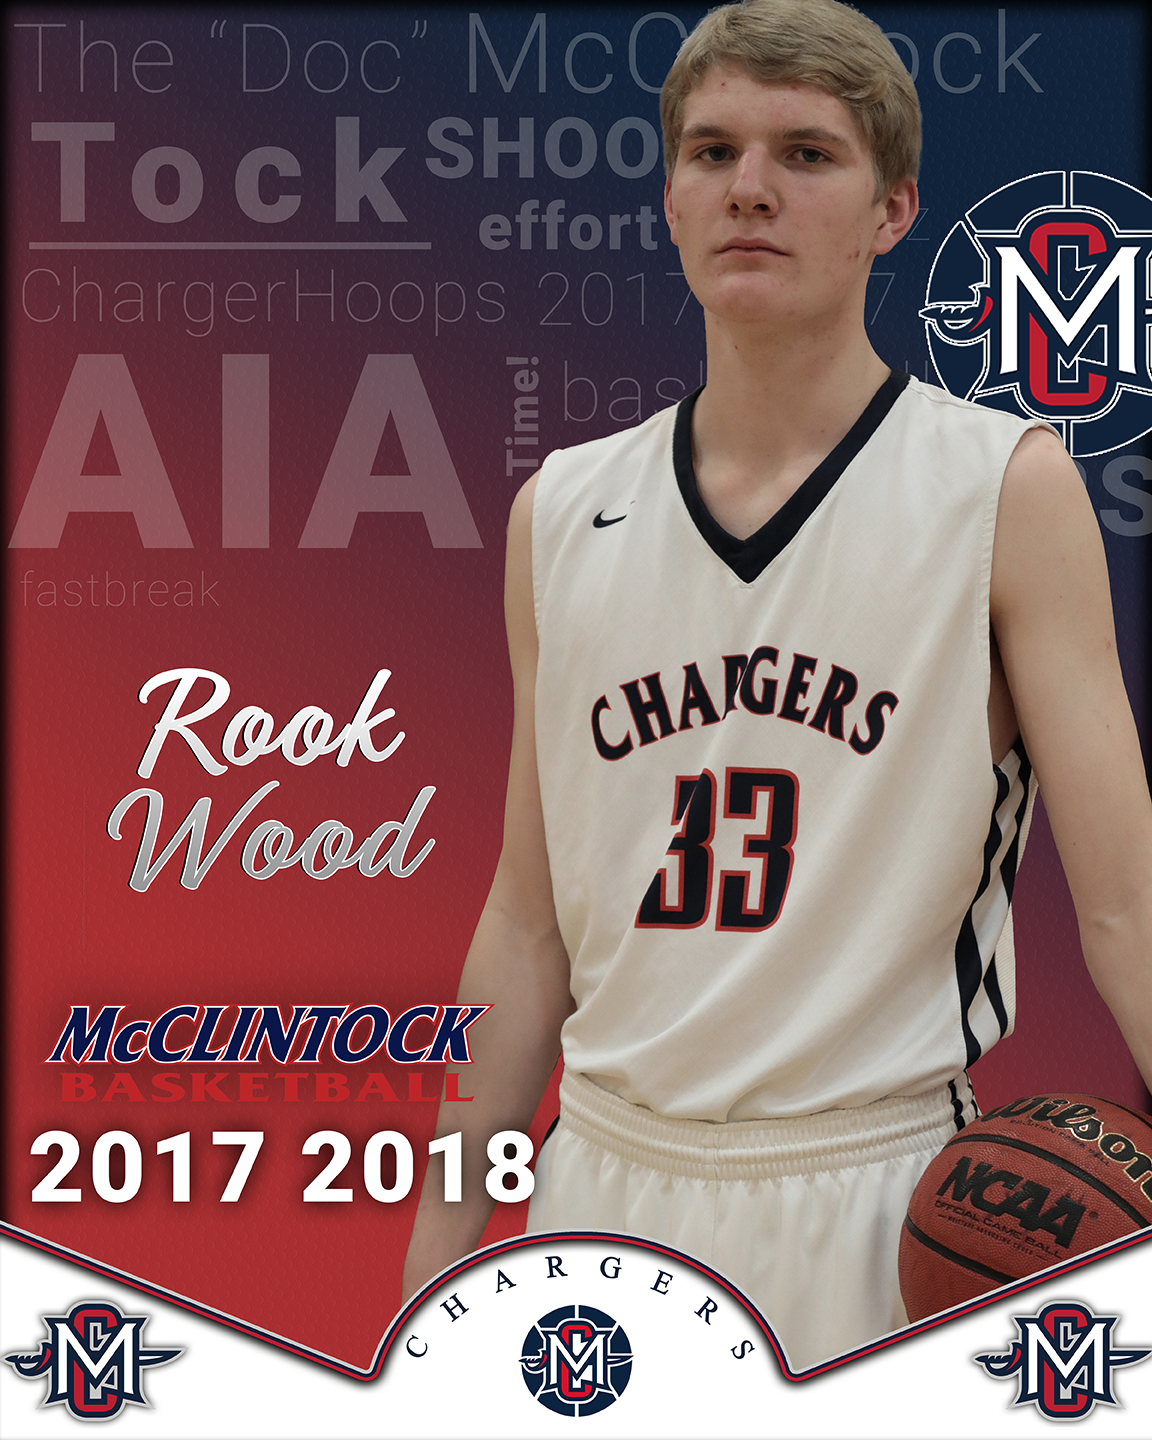 McClintock Basketball